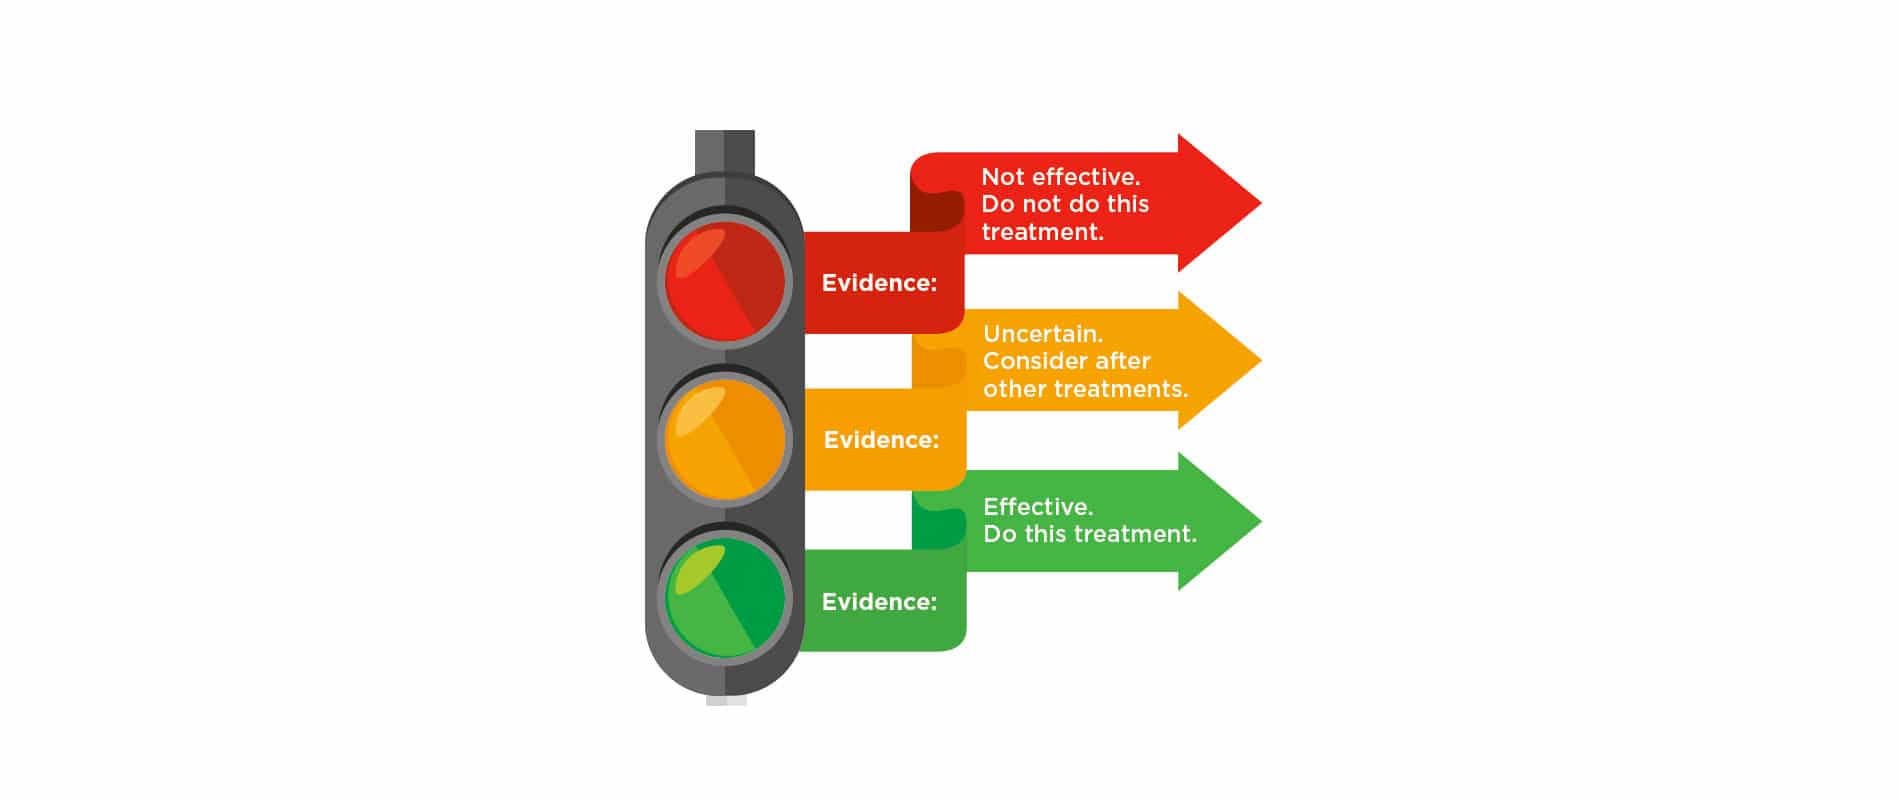 define traffic light